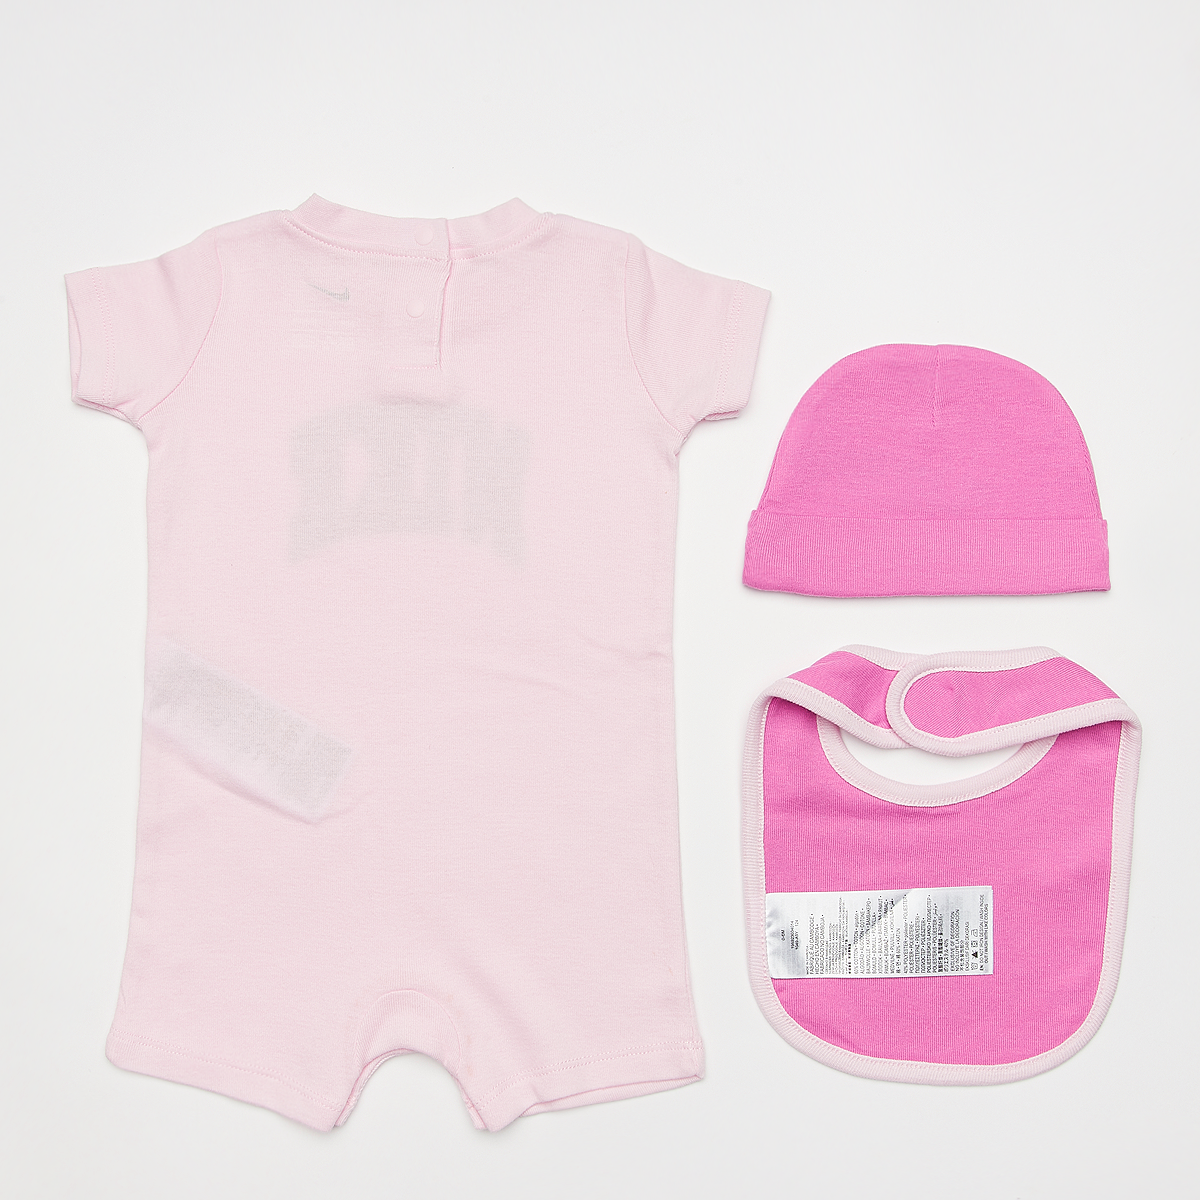 Nike Romper Hat Bib Set (3 Piece) Baby sets Kids pink foam maat: 0m-6m beschikbare maaten:0m-6m